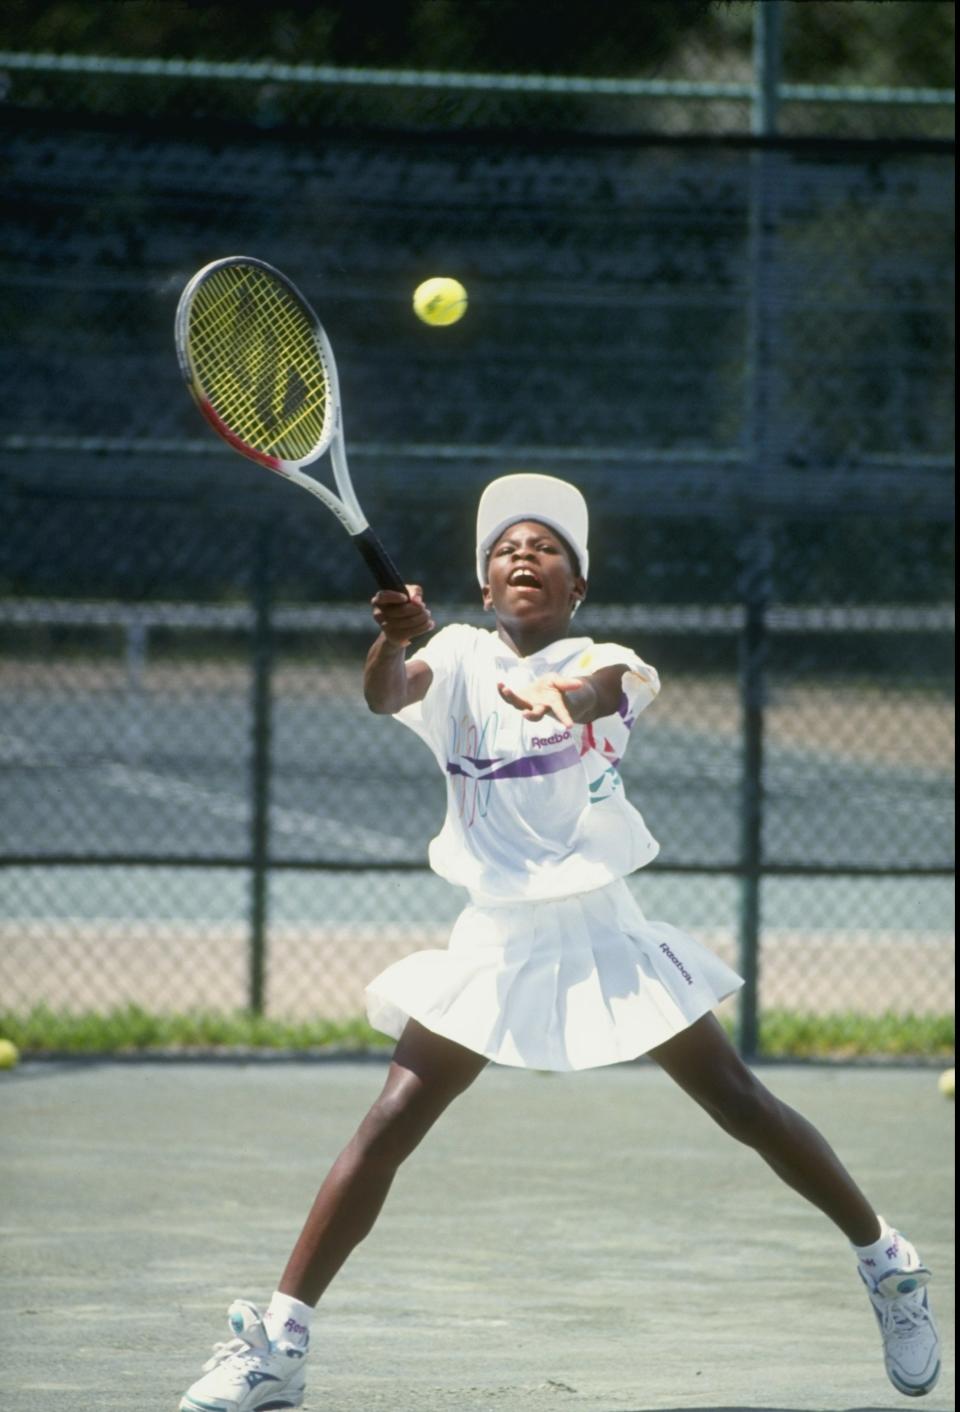 Playing tennis in Florida.&nbsp;